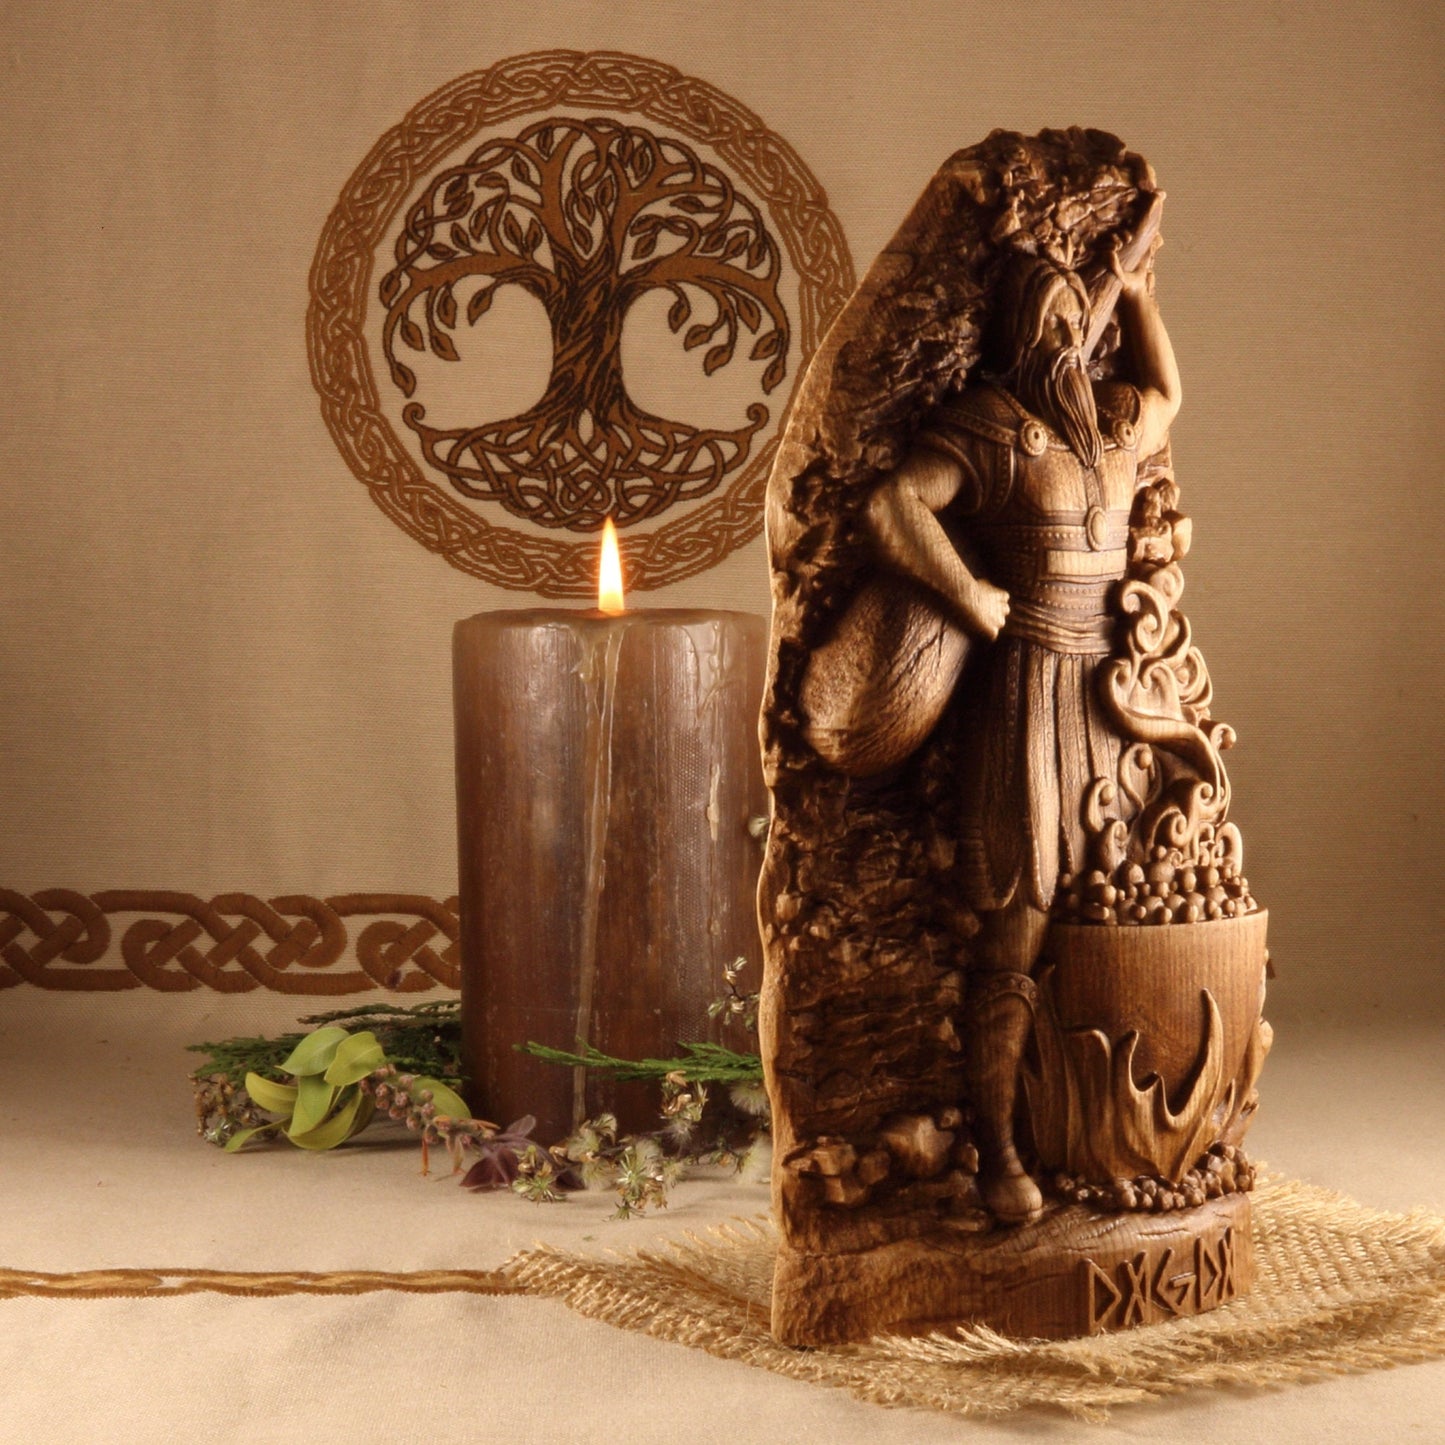 Dagda Wood sculpture art, Carved wood statue